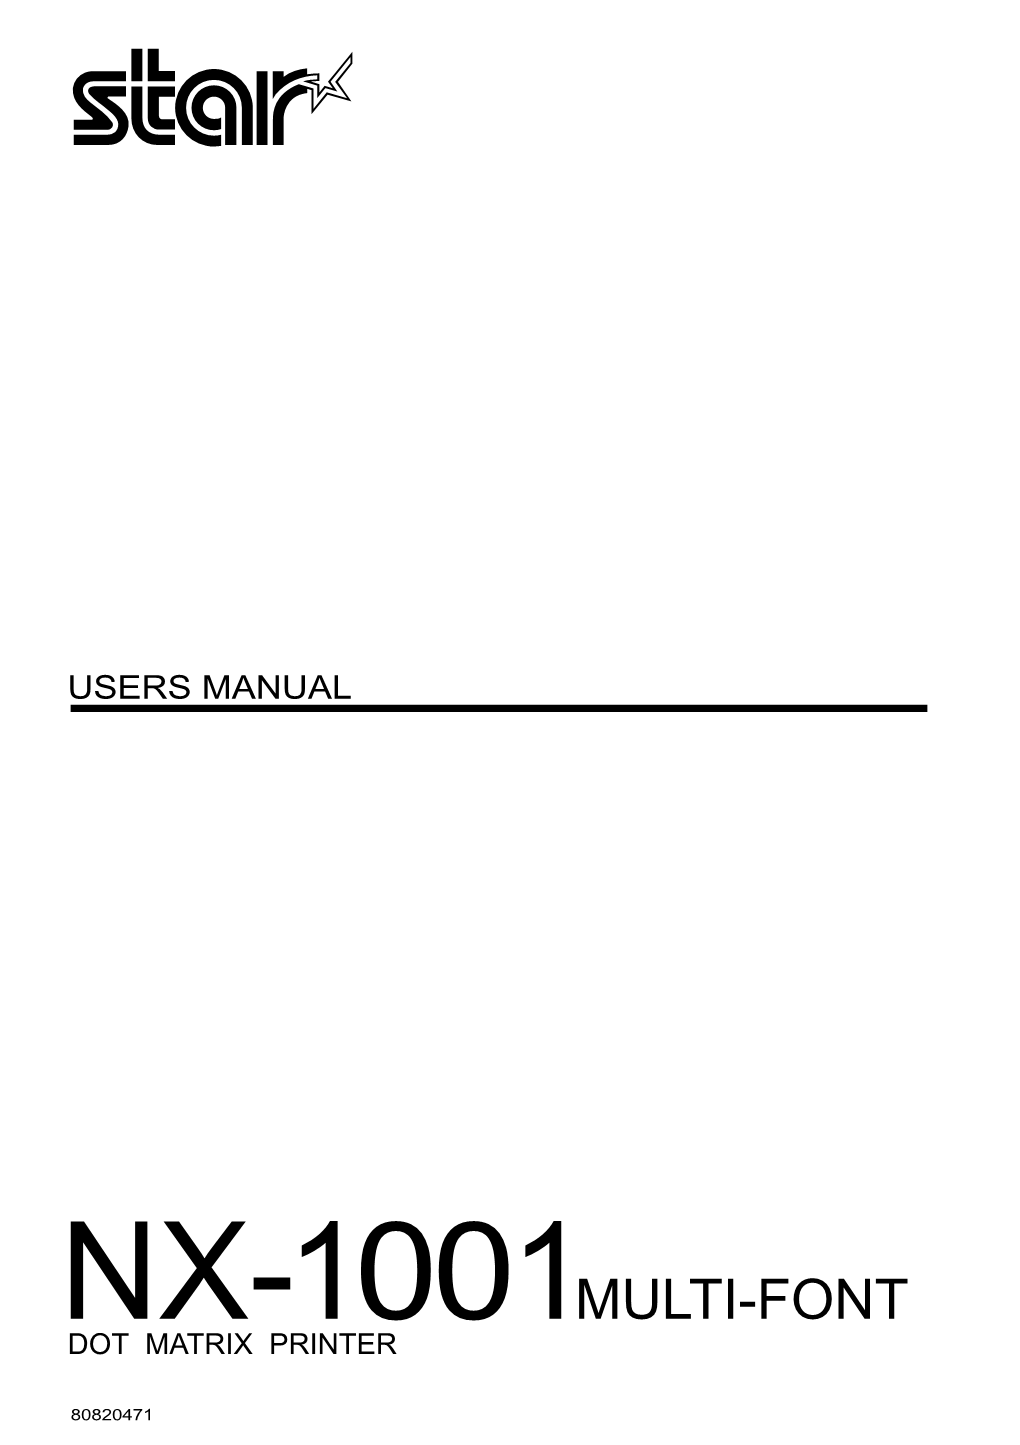 User's Manual NX-1001